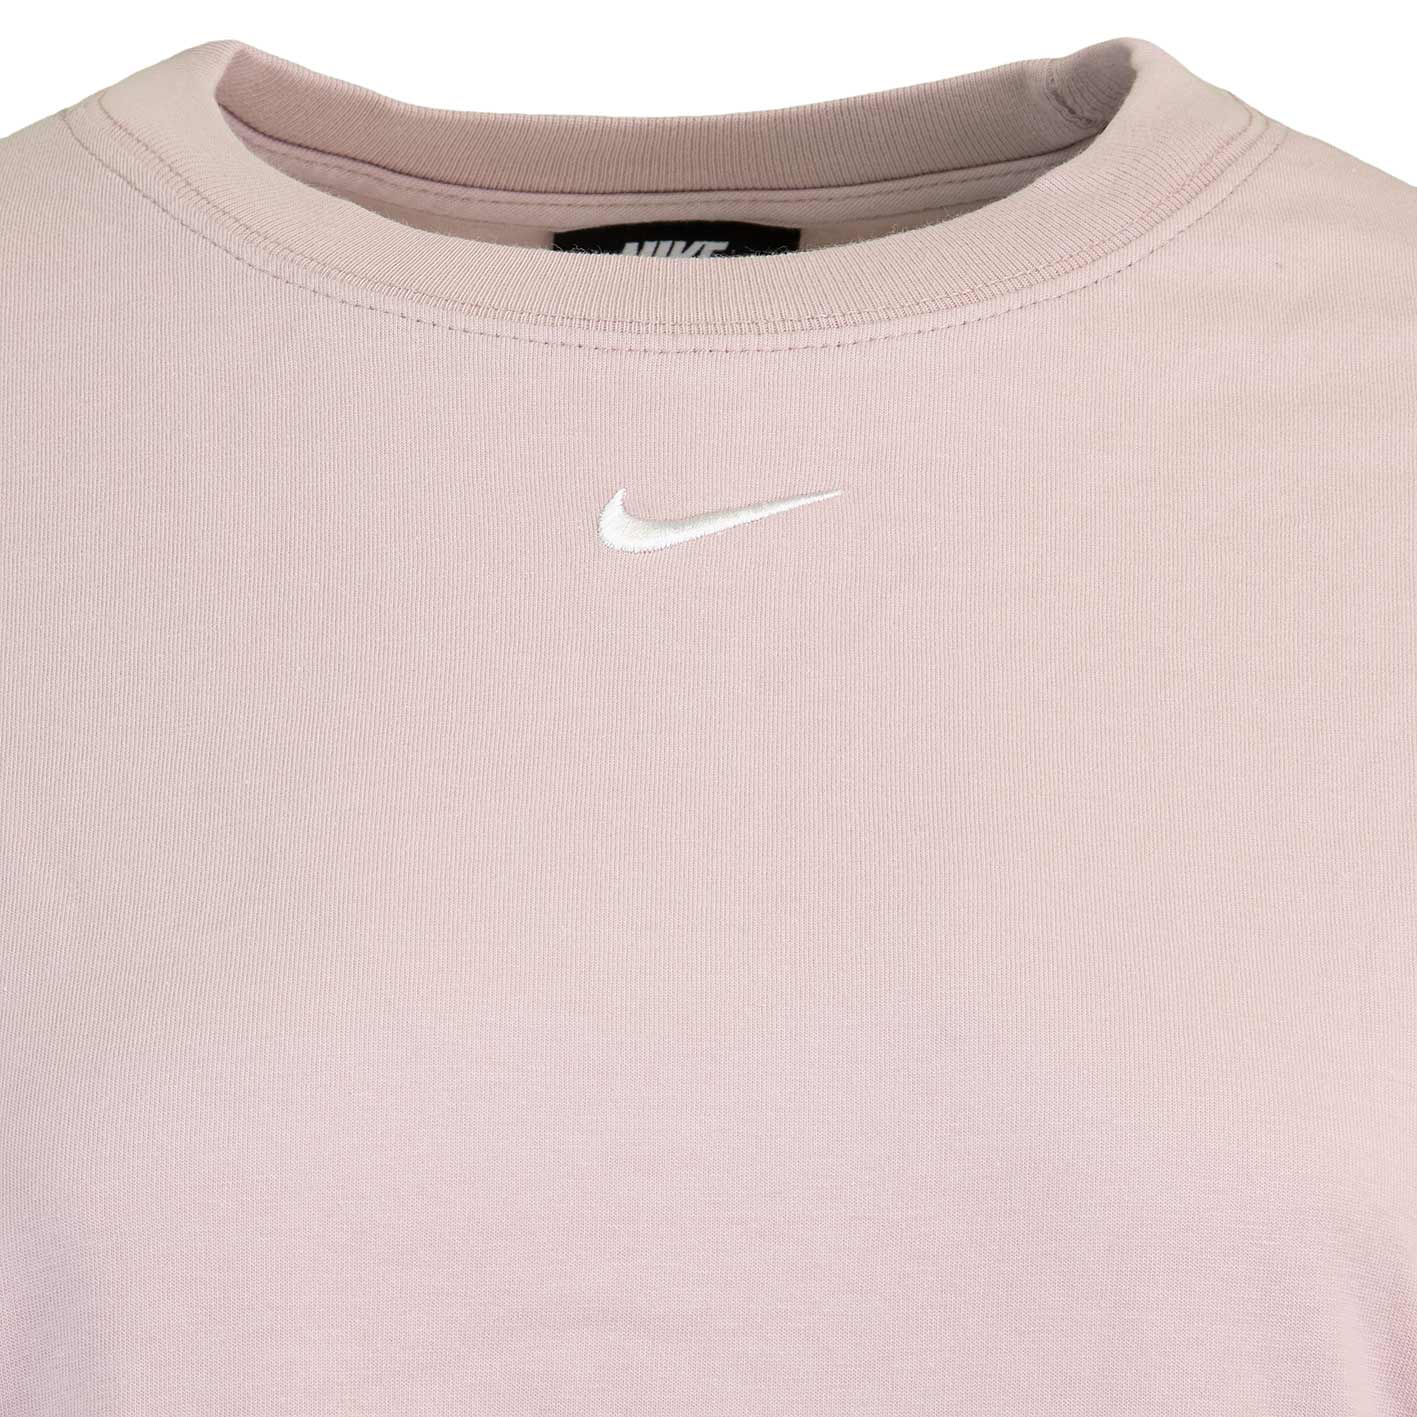 ☆ Nike Essential Damen Dress/Kleid rosa - hier bestellen!